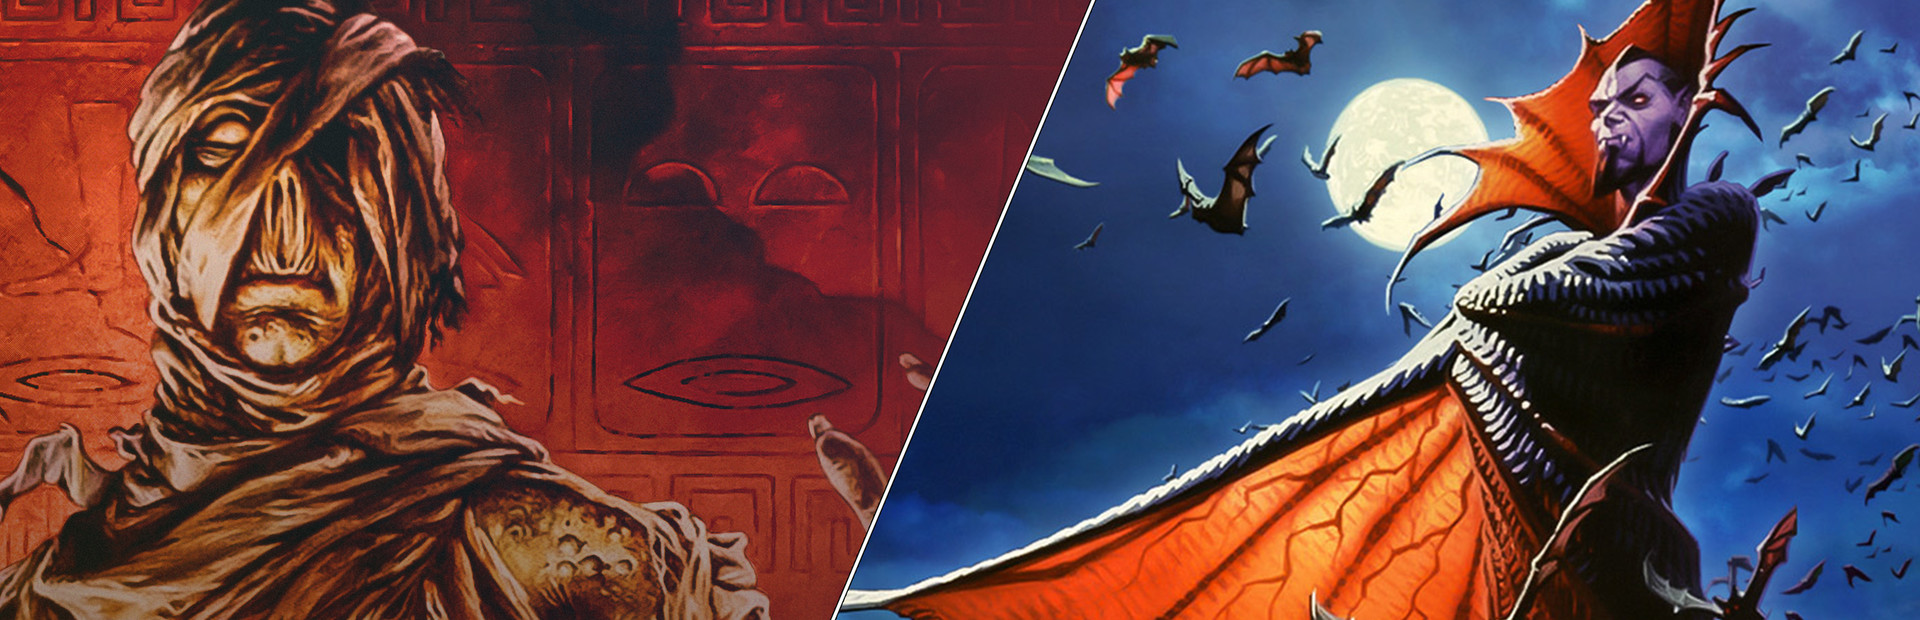 Dungeons & Dragons: Ravenloft Series cover image